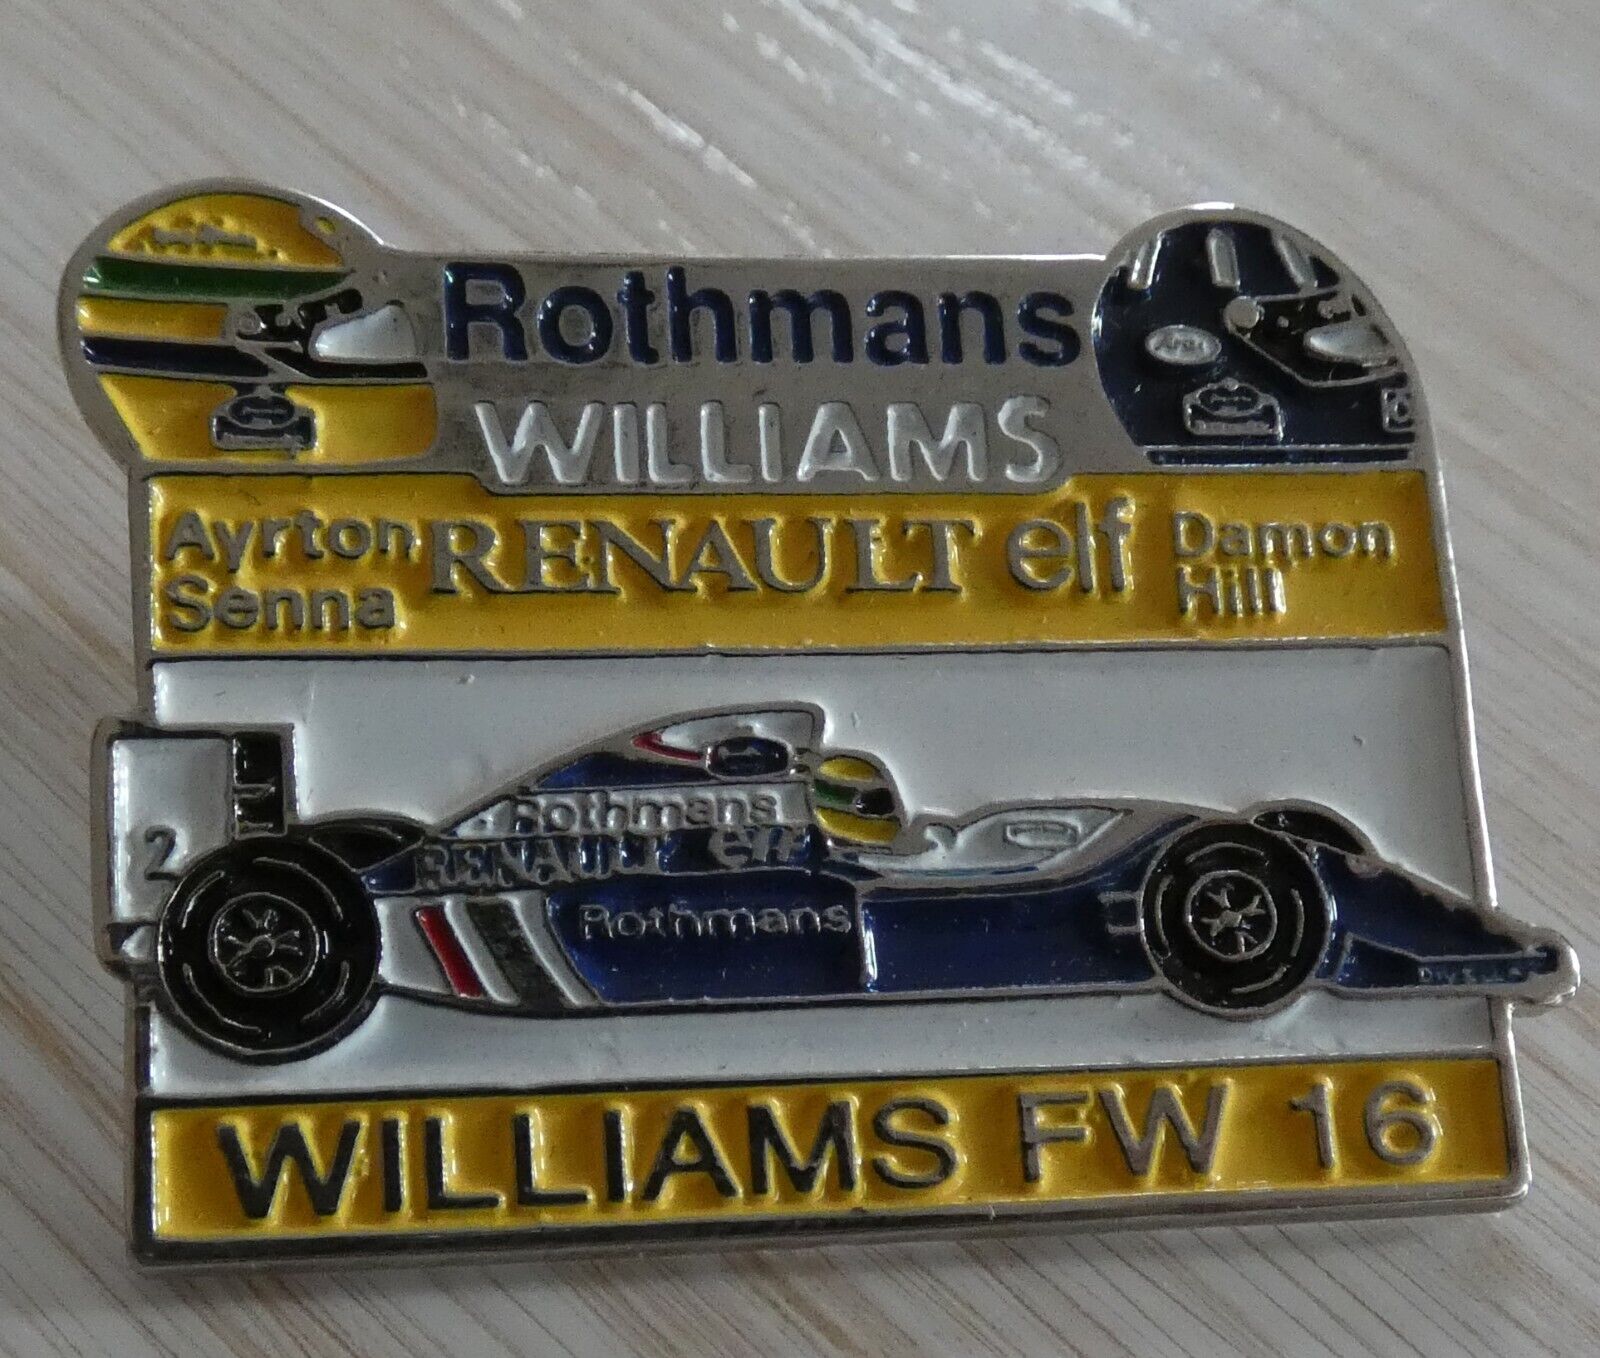 PIN'S F1 FORMULA ONE AYRTON SENNA DAMON HILL ROTHMANS WILLIAMS RENAULT FW 16